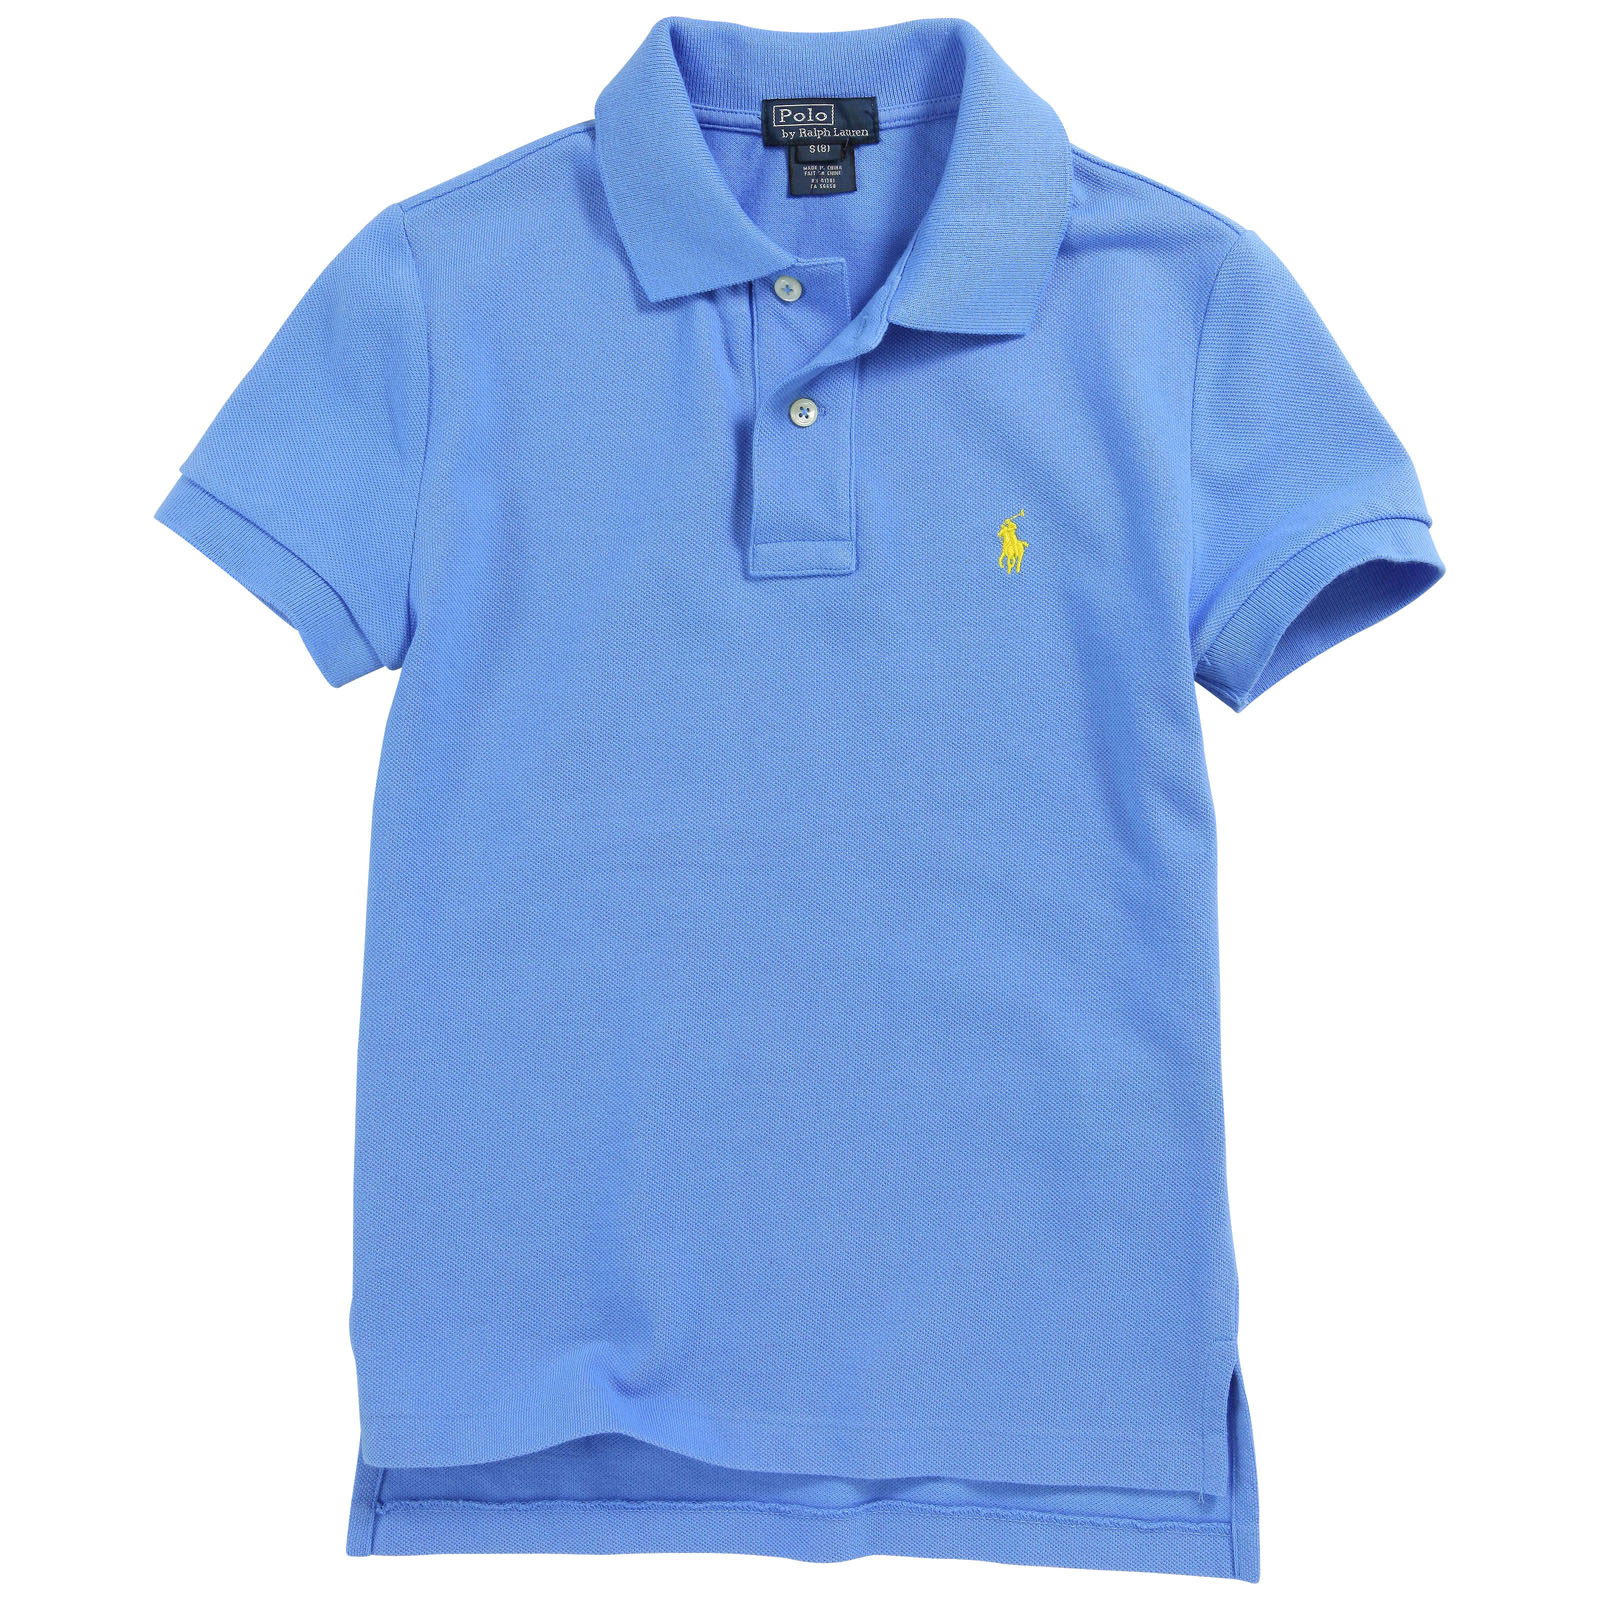     Blue Piqu  Cotton Polo Shirt Blue       Clipart Best   Clipart Best